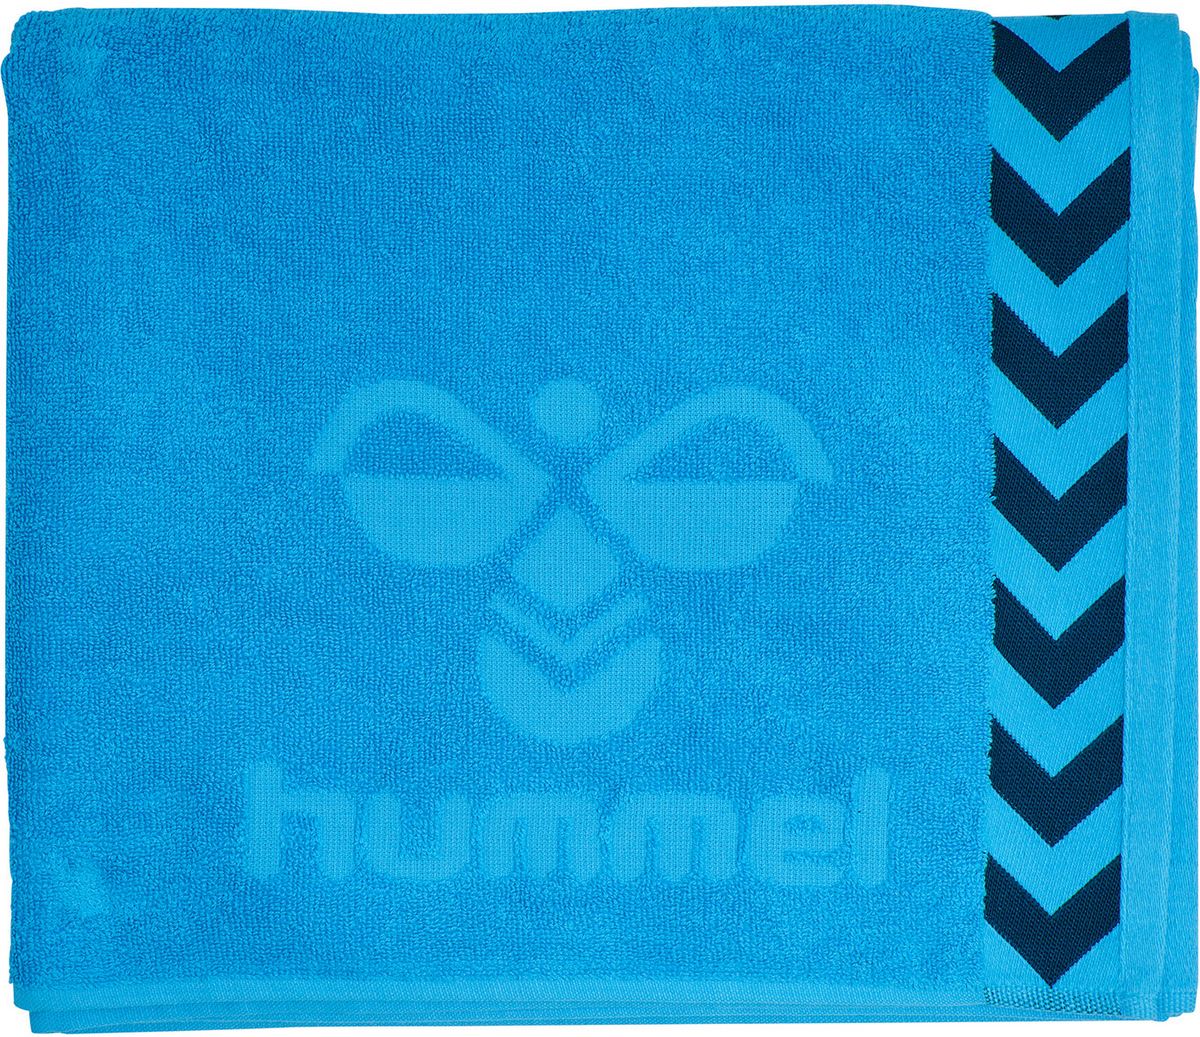 HUMMEL PETITE SERVIETTE 100x50 cm Blue danube